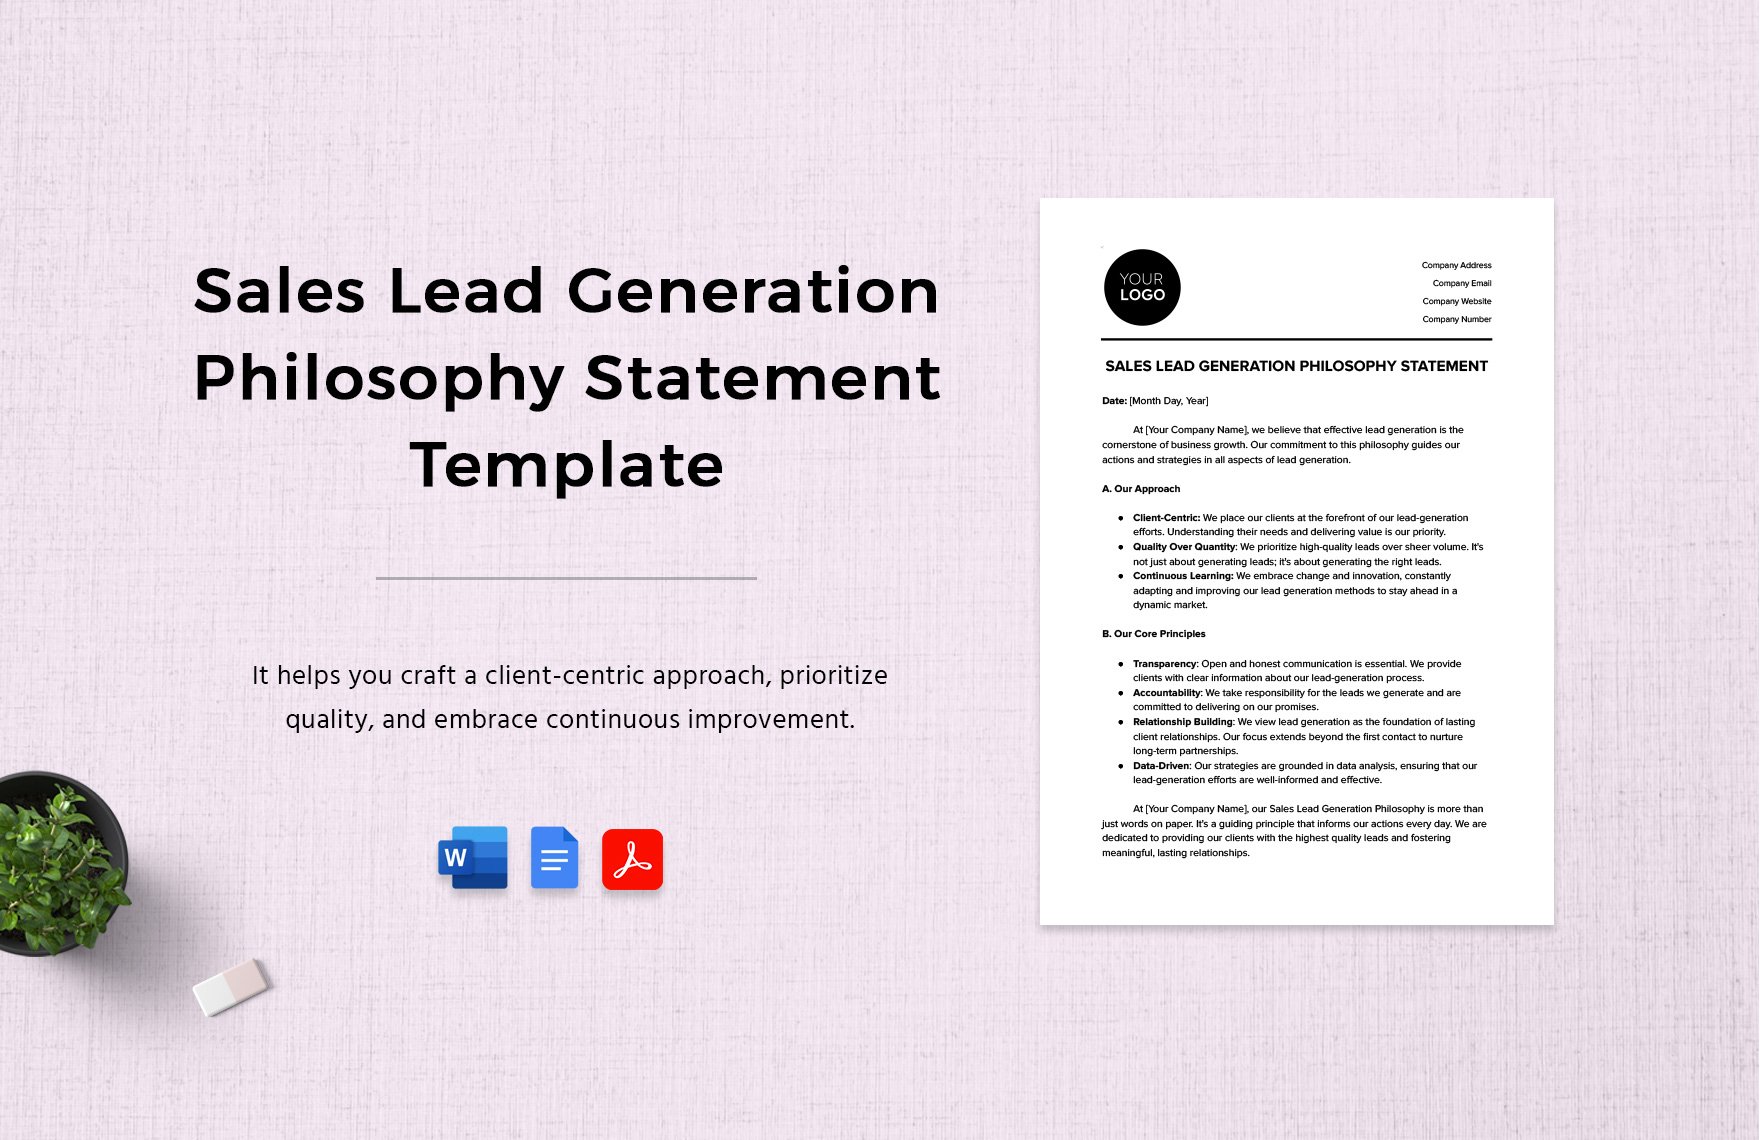 Sales Lead Generation Philosophy Statement Template